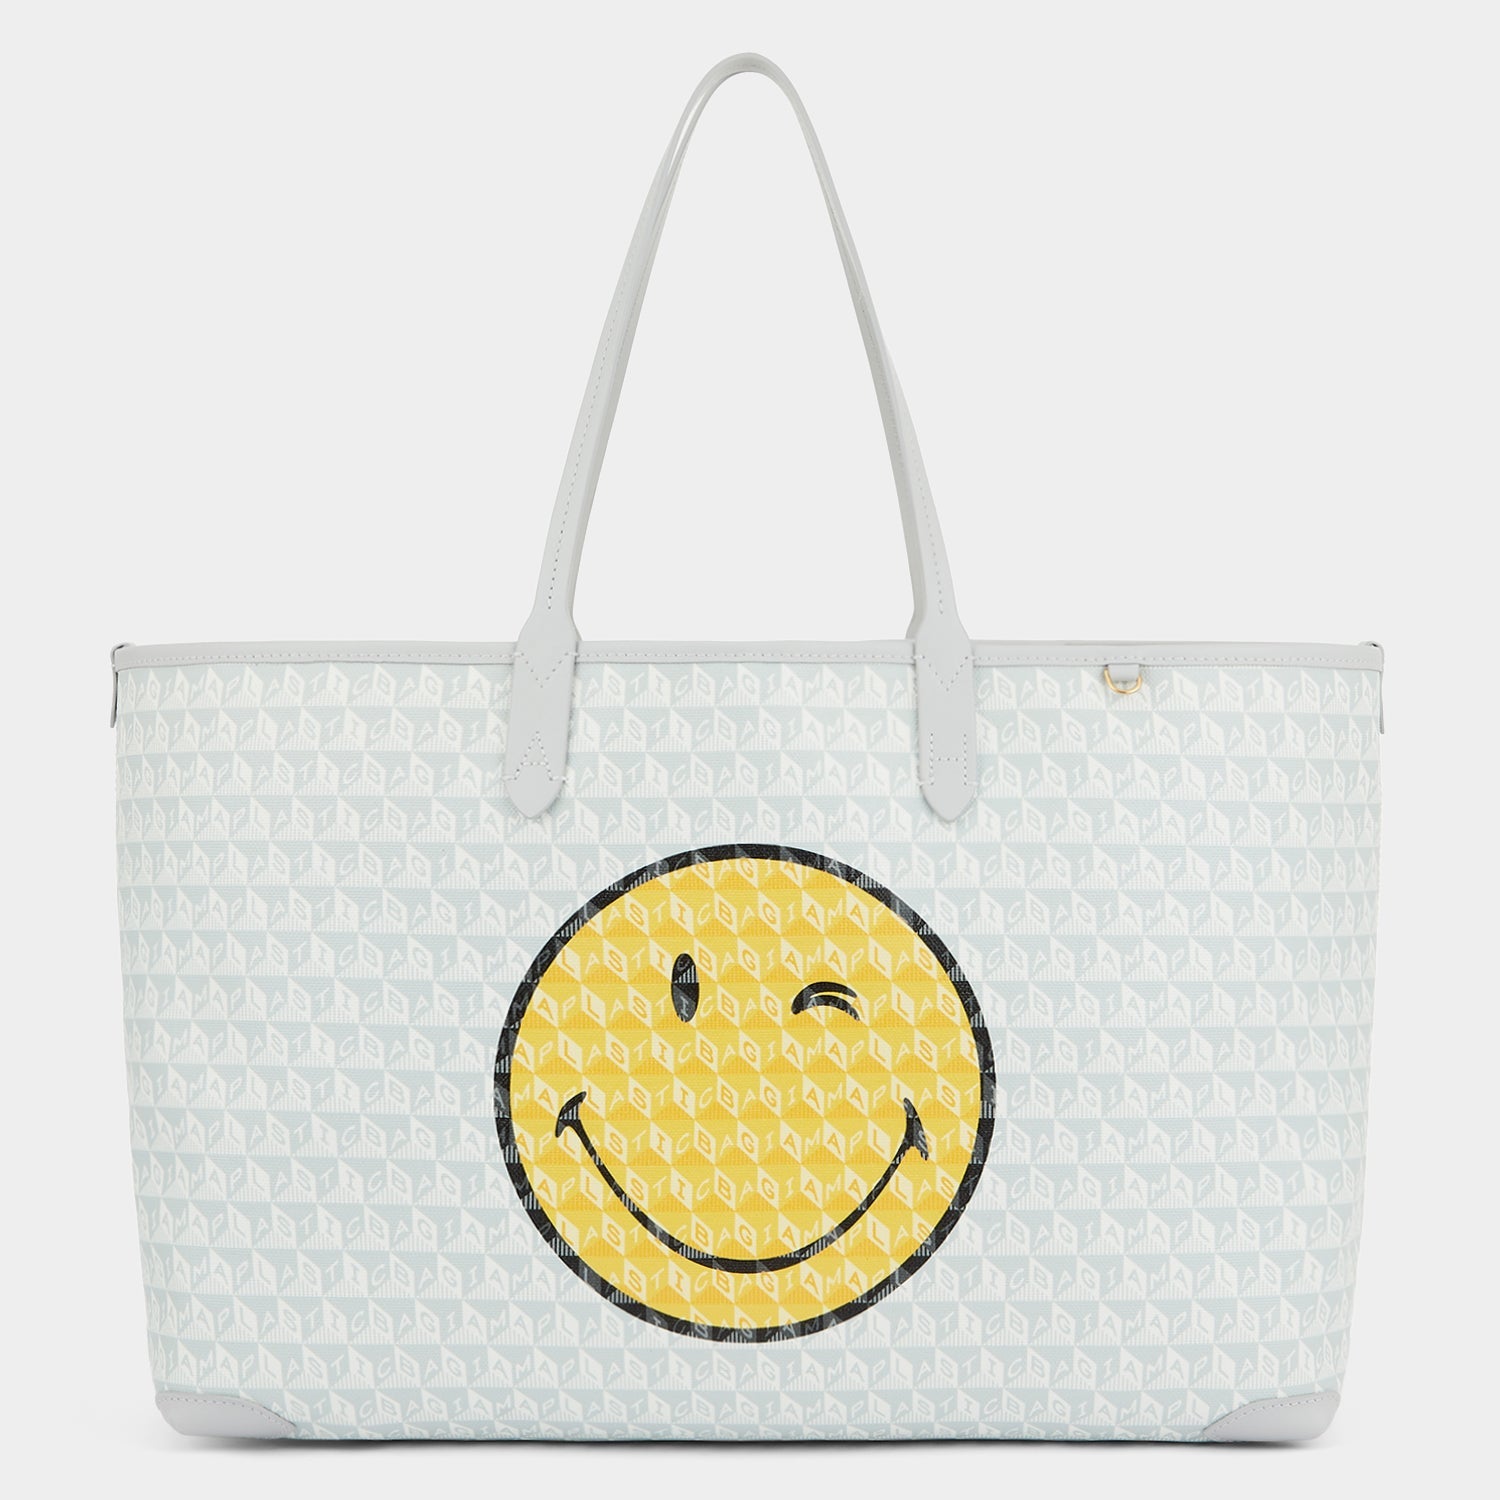 Anya Hindmarch I Am A Plastic Bag Smiley Tote Bag